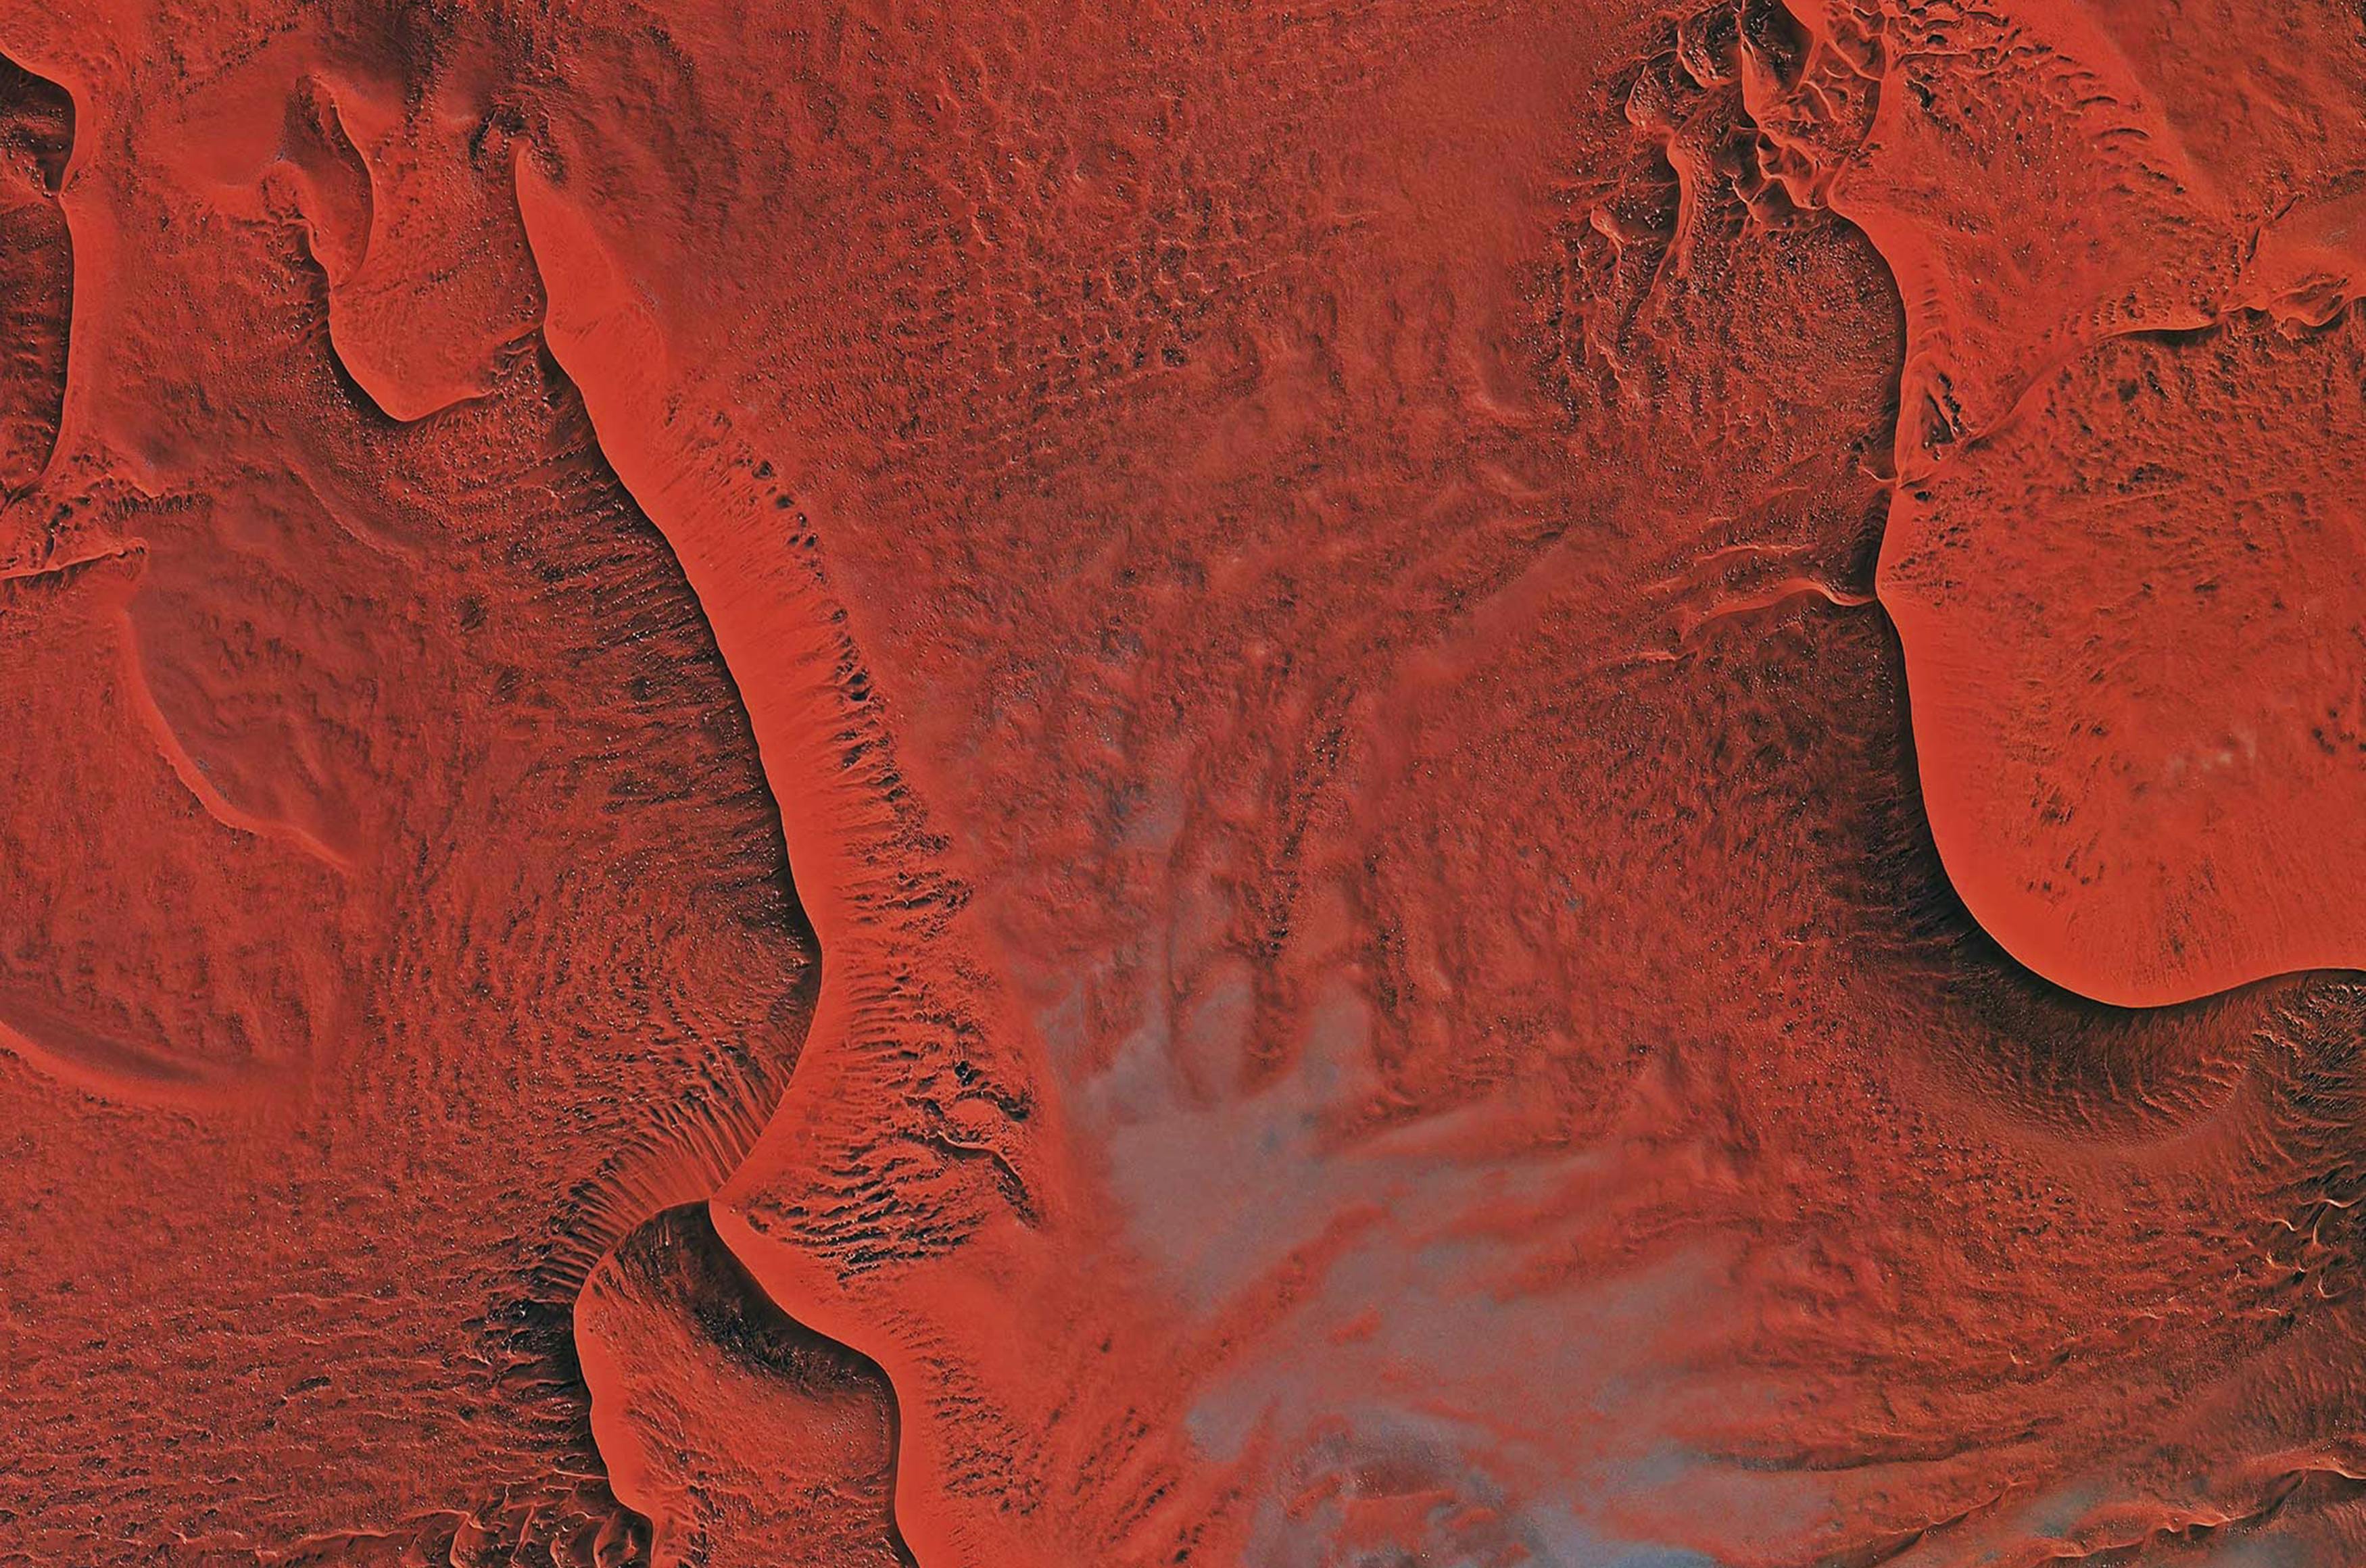 Satellite infrared image